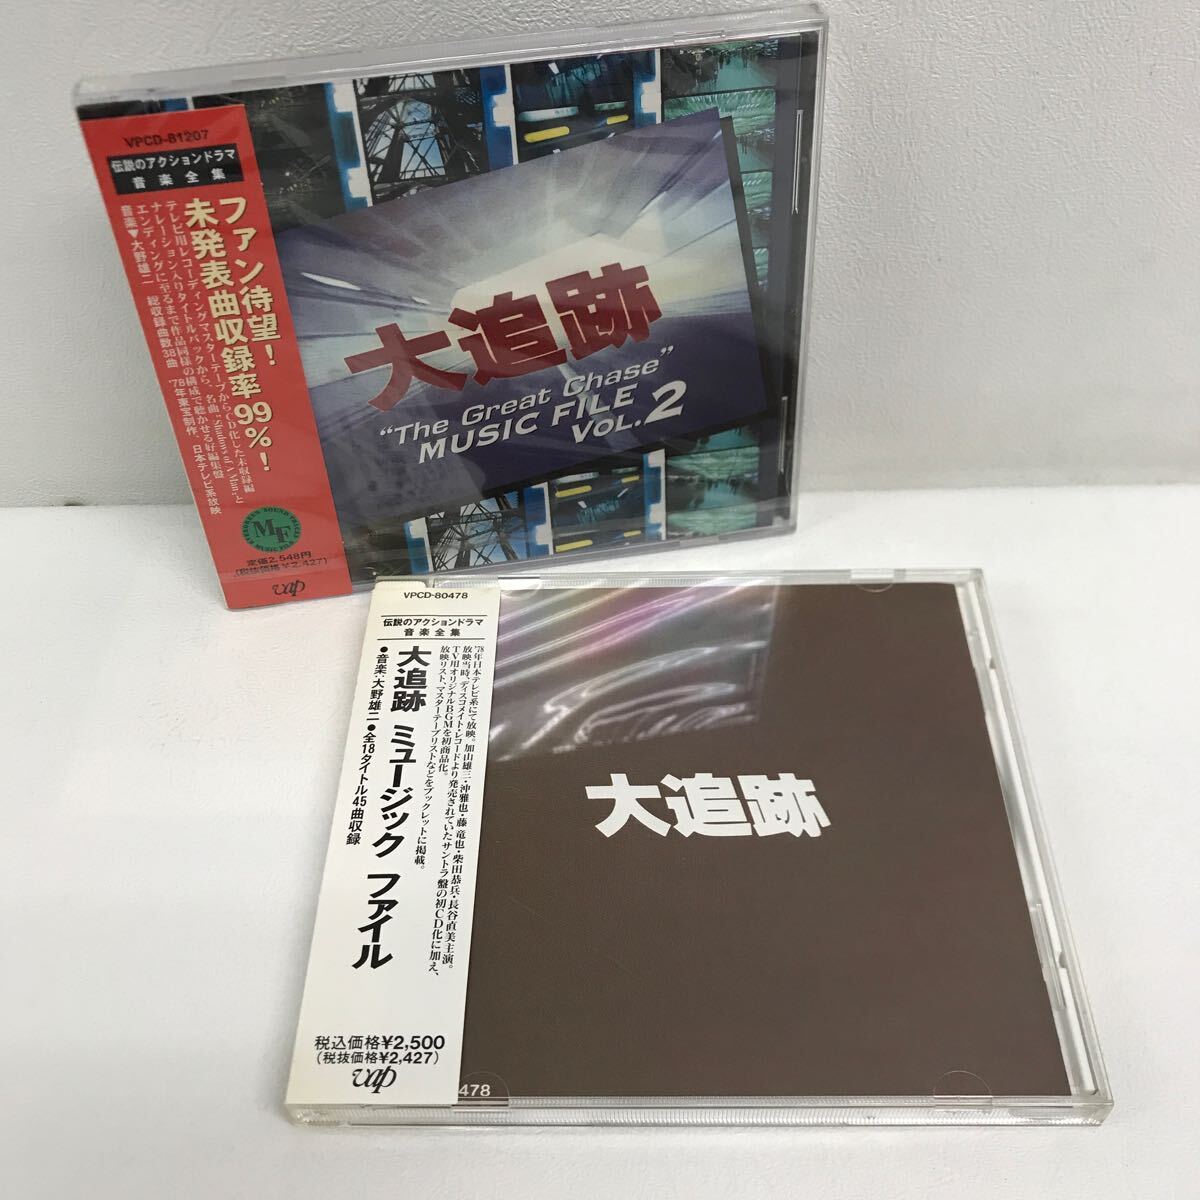 I0509C3 summarize * large pursuit MUSIC FILE 1 2 CD original * soundtrack 2 volume set action drama music complete set of works obi attaching 